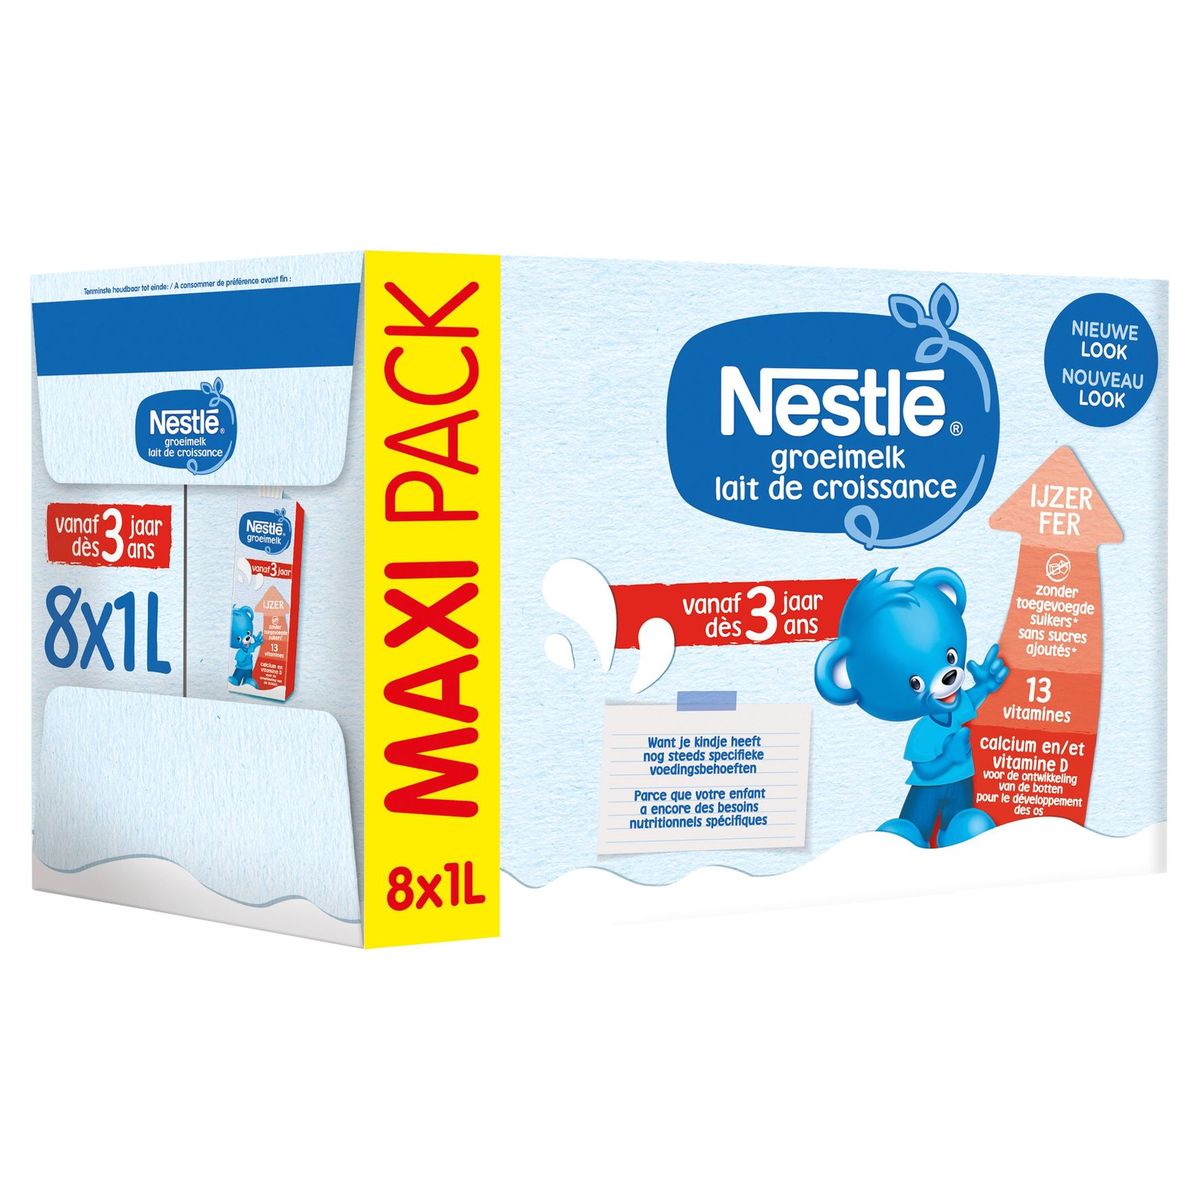 Nestlé Groeimelk 3+ vanaf 3 jaar Maxipack 8x1L